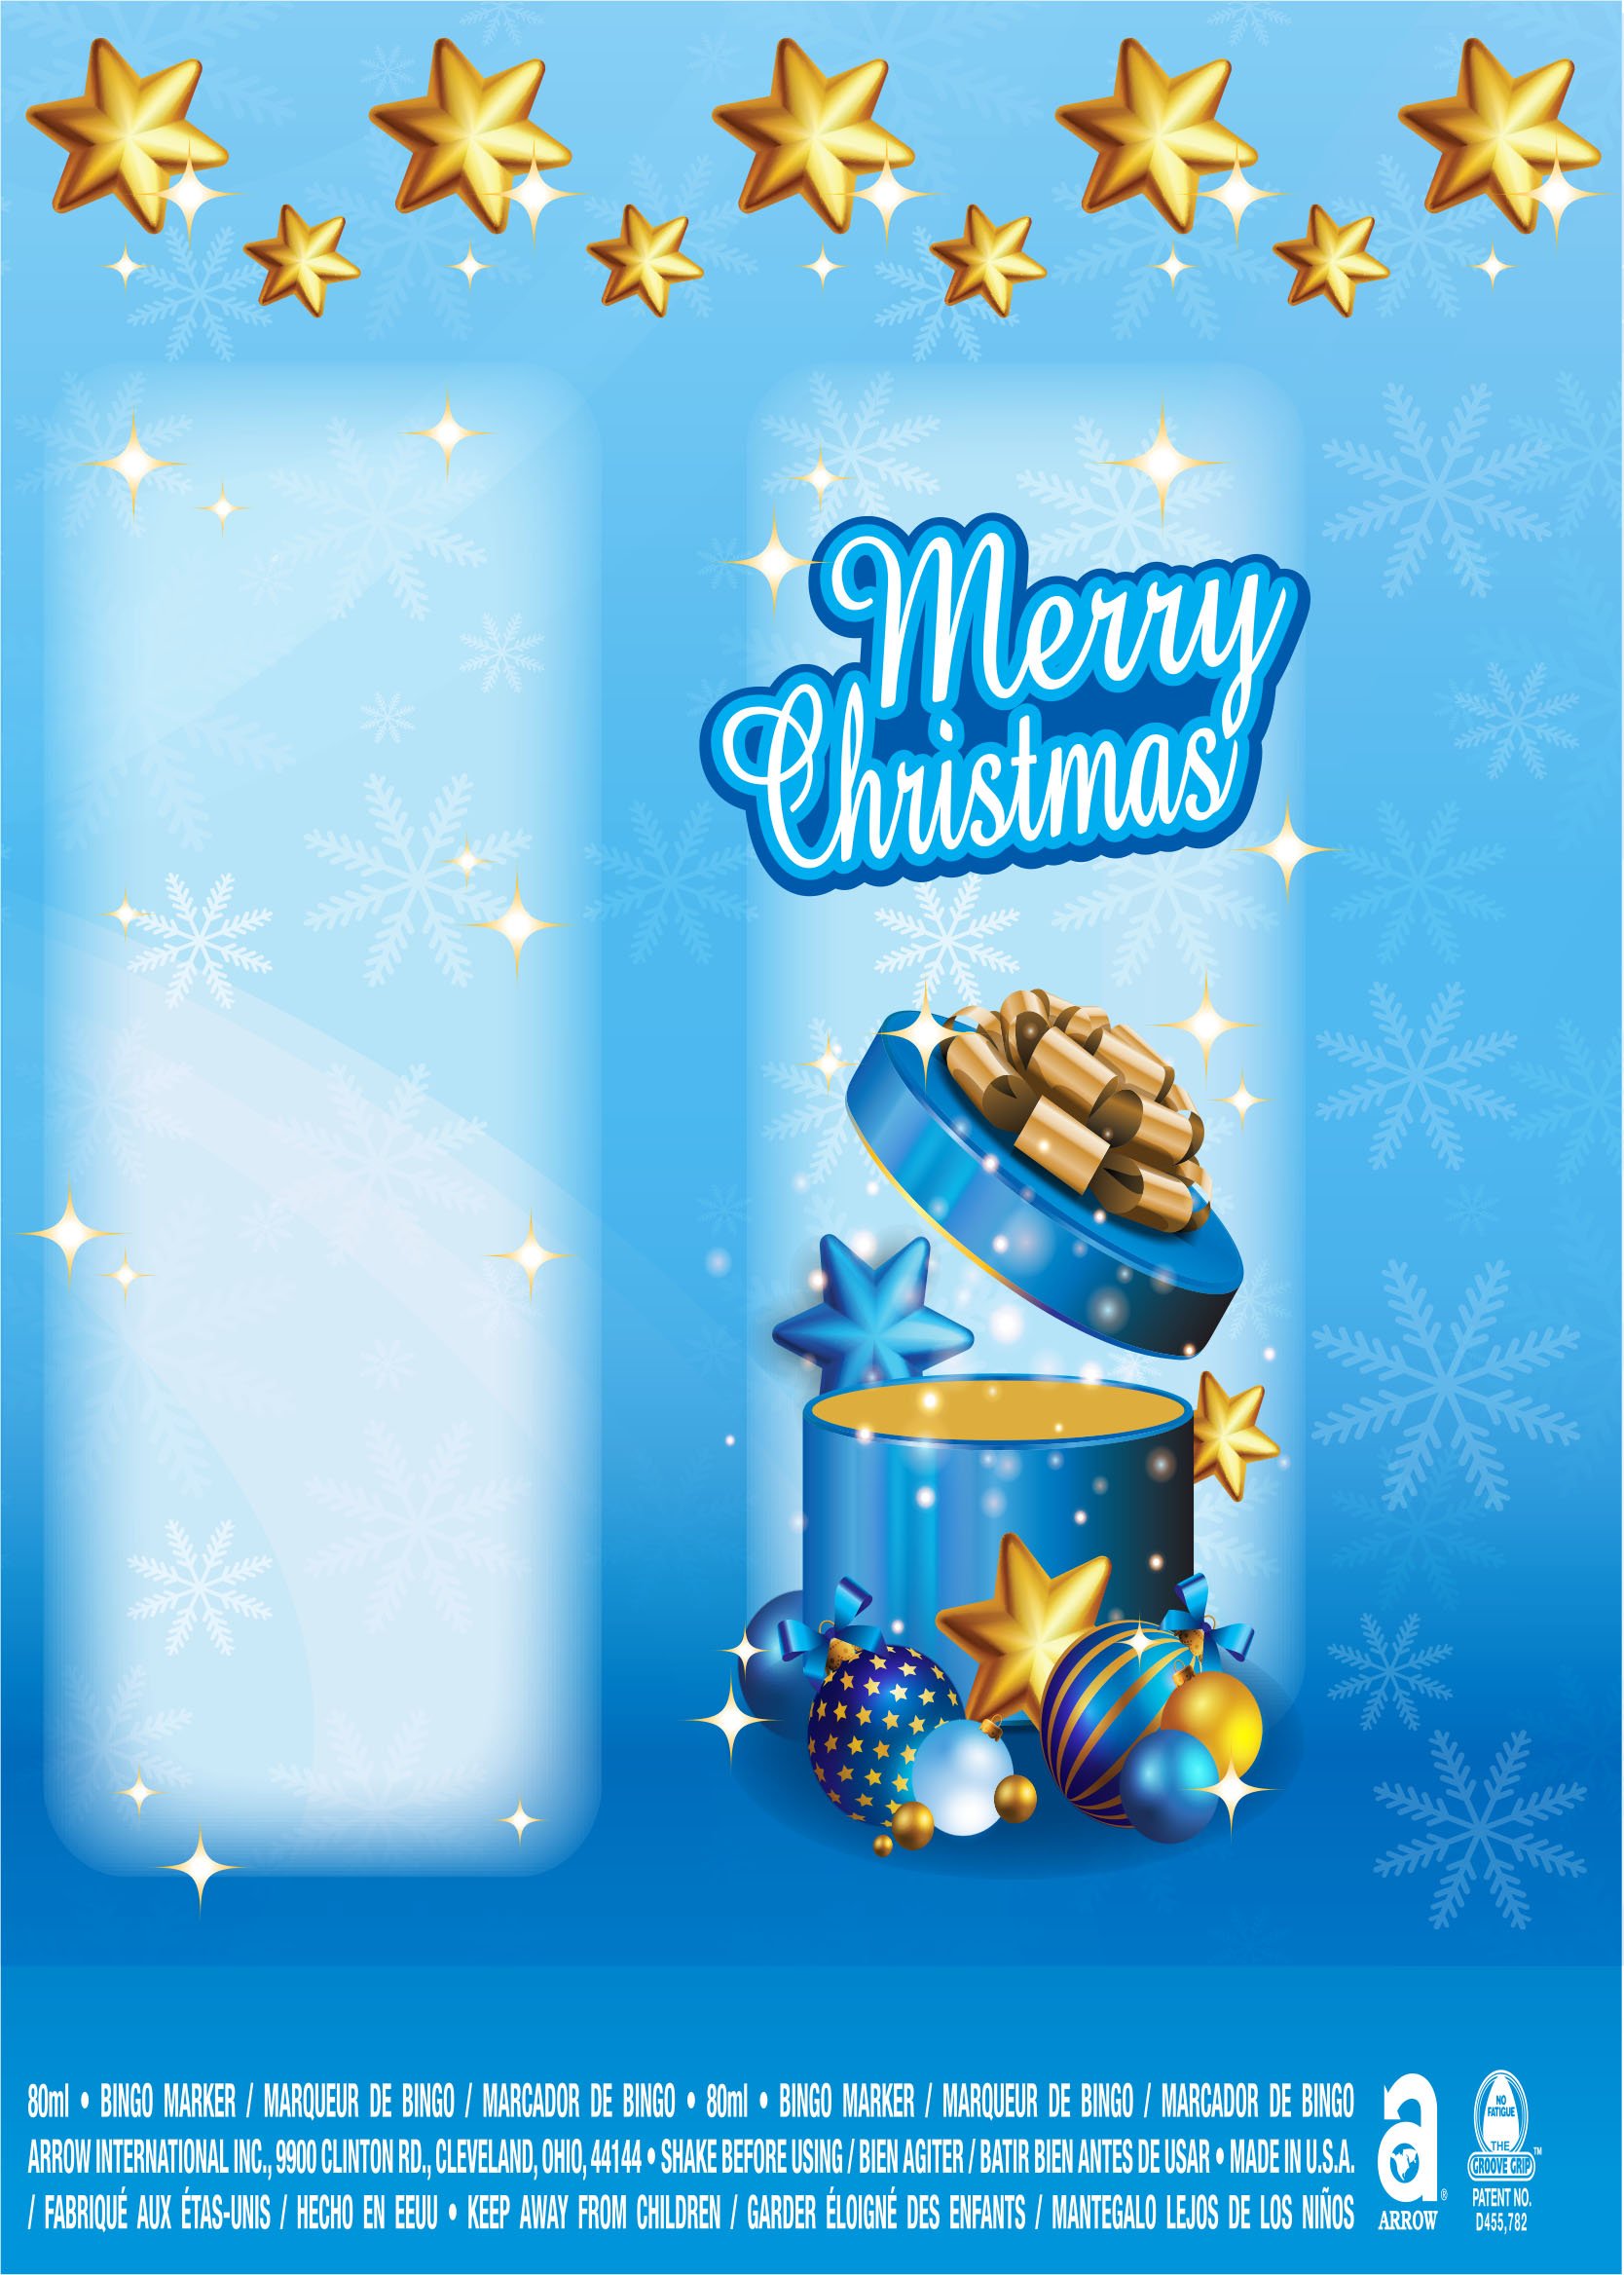 Merry Christmas / Gift and Stars